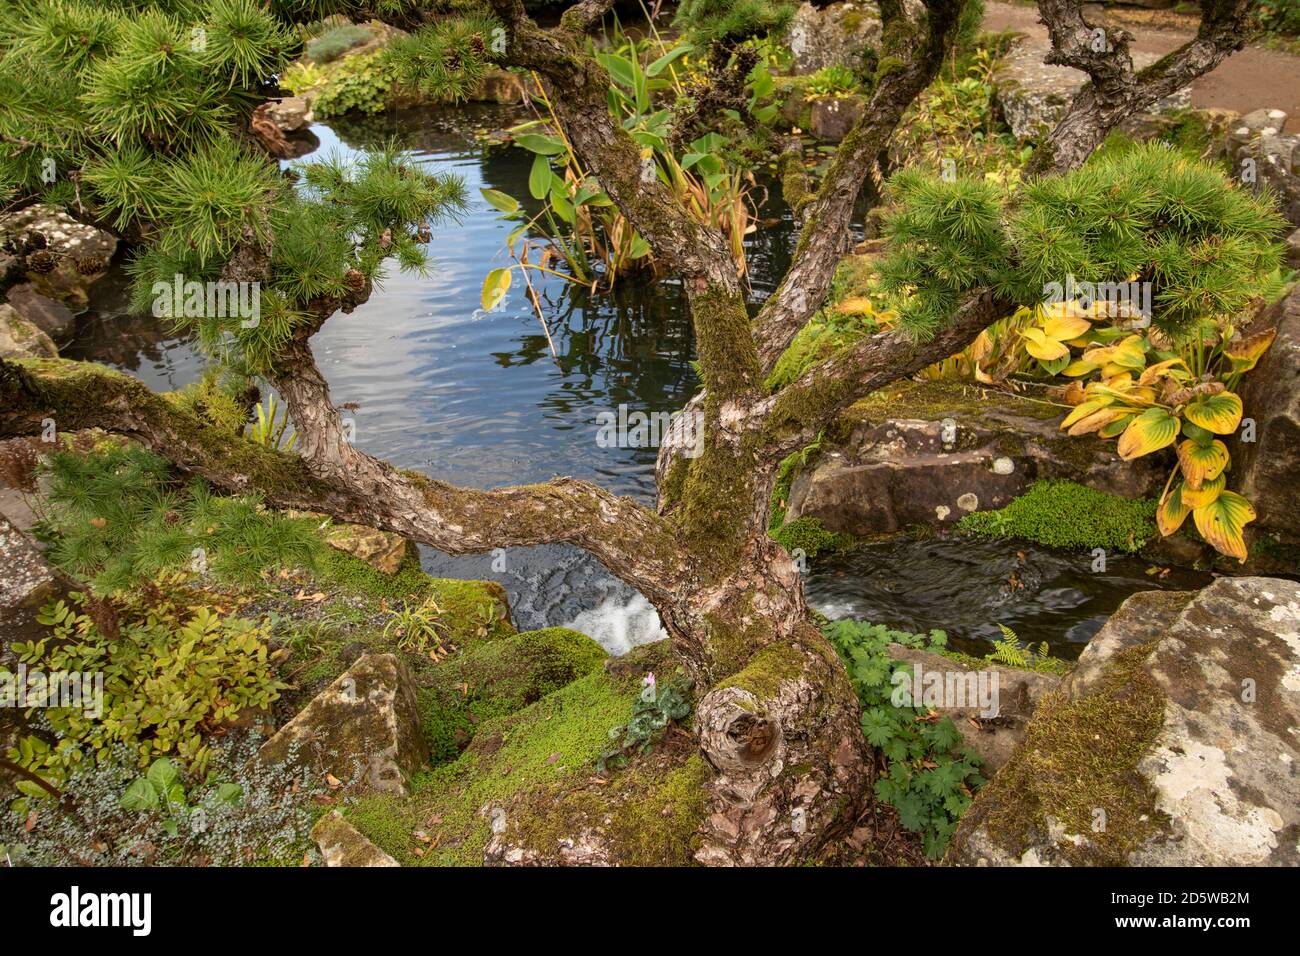 Larix Kaempteri tree in natural garden landscape setting with pond Stock Photo